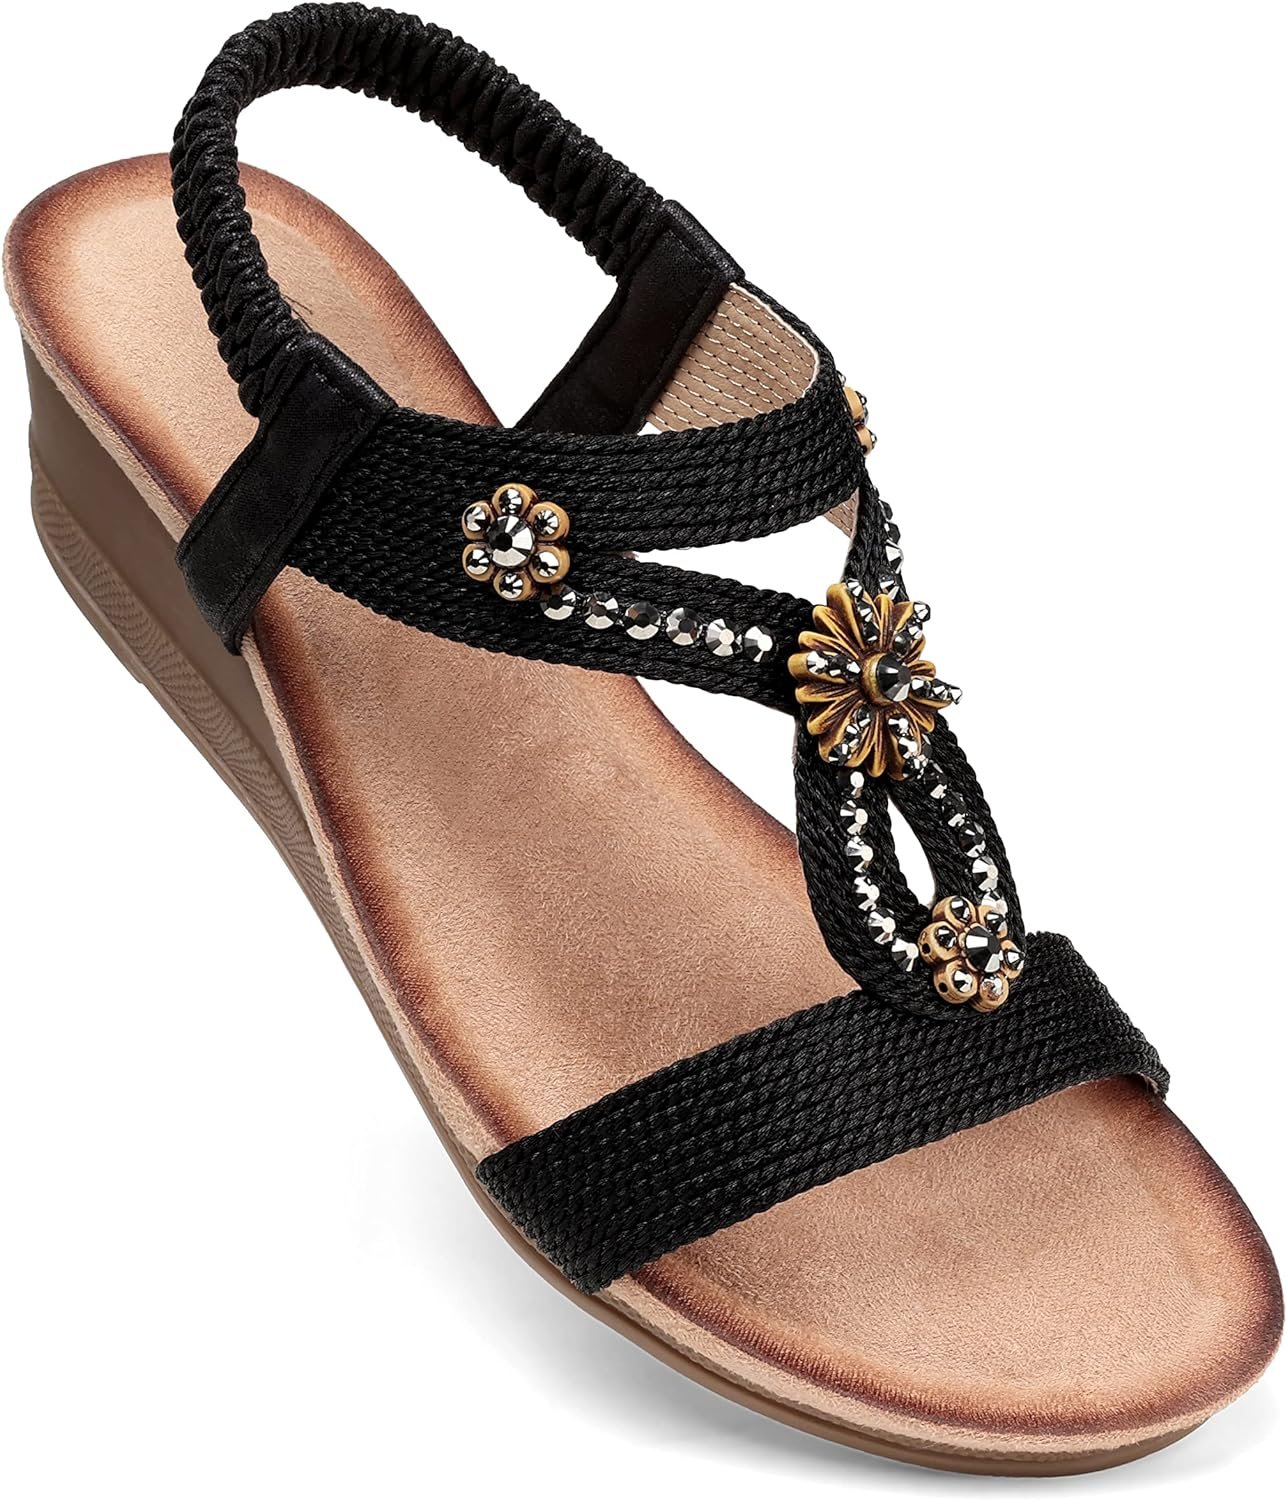 SHIBEVER Womens Wedge Sandals Flower Low Heel Dressy Sandals Elastic Ankle Strap Rhinestone Sandals Summer Comfortable Shoe